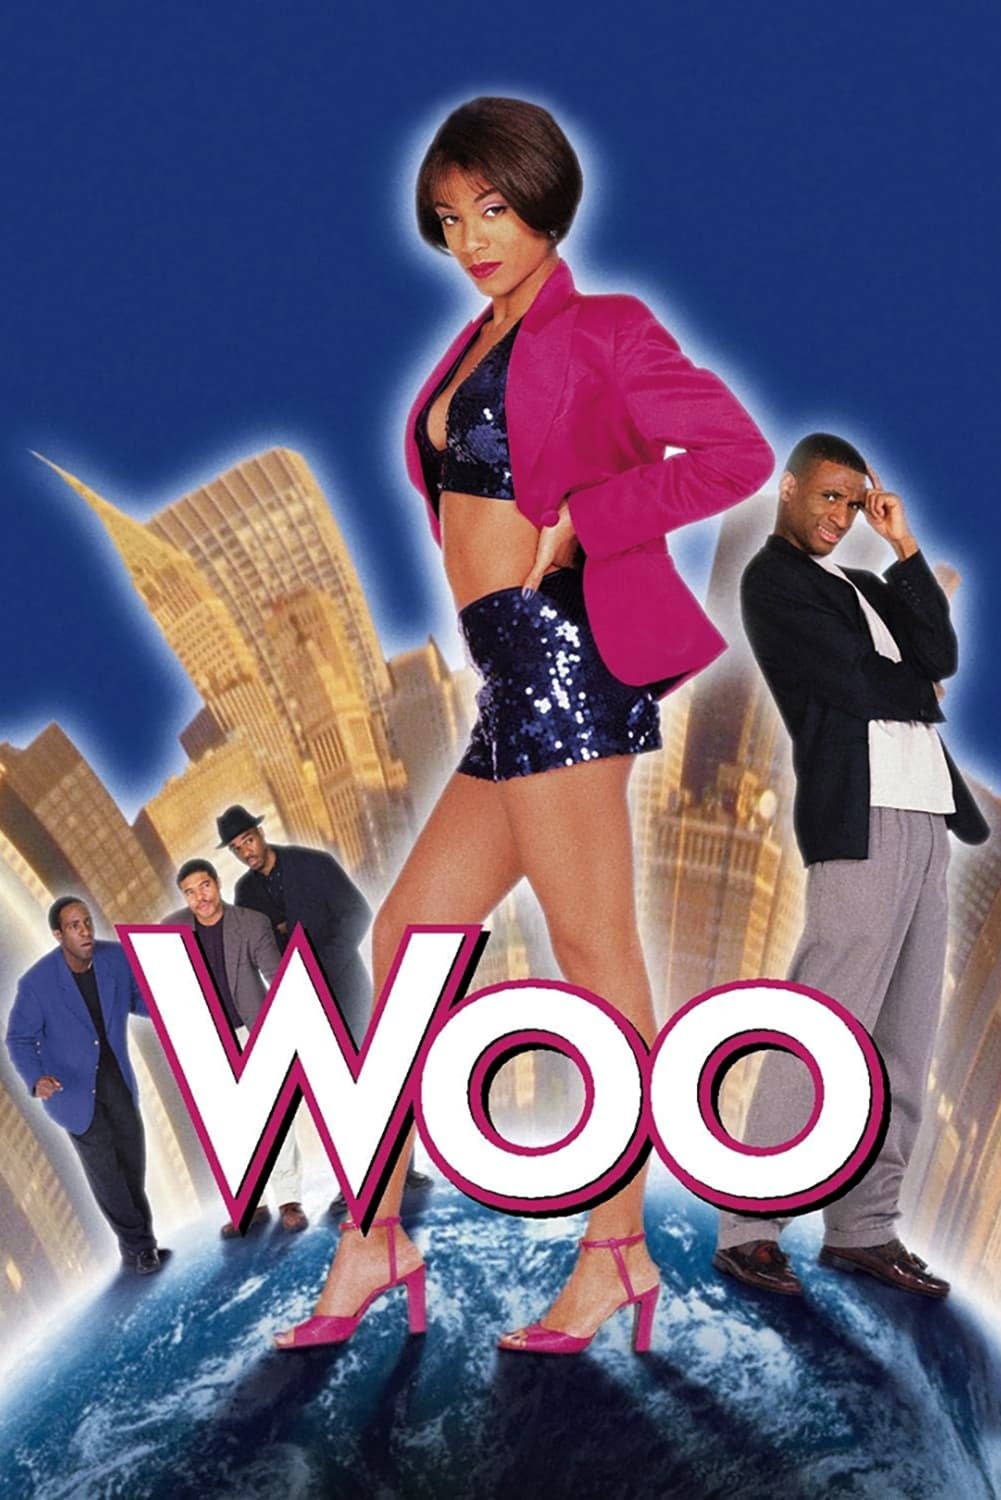 Woo (1998)